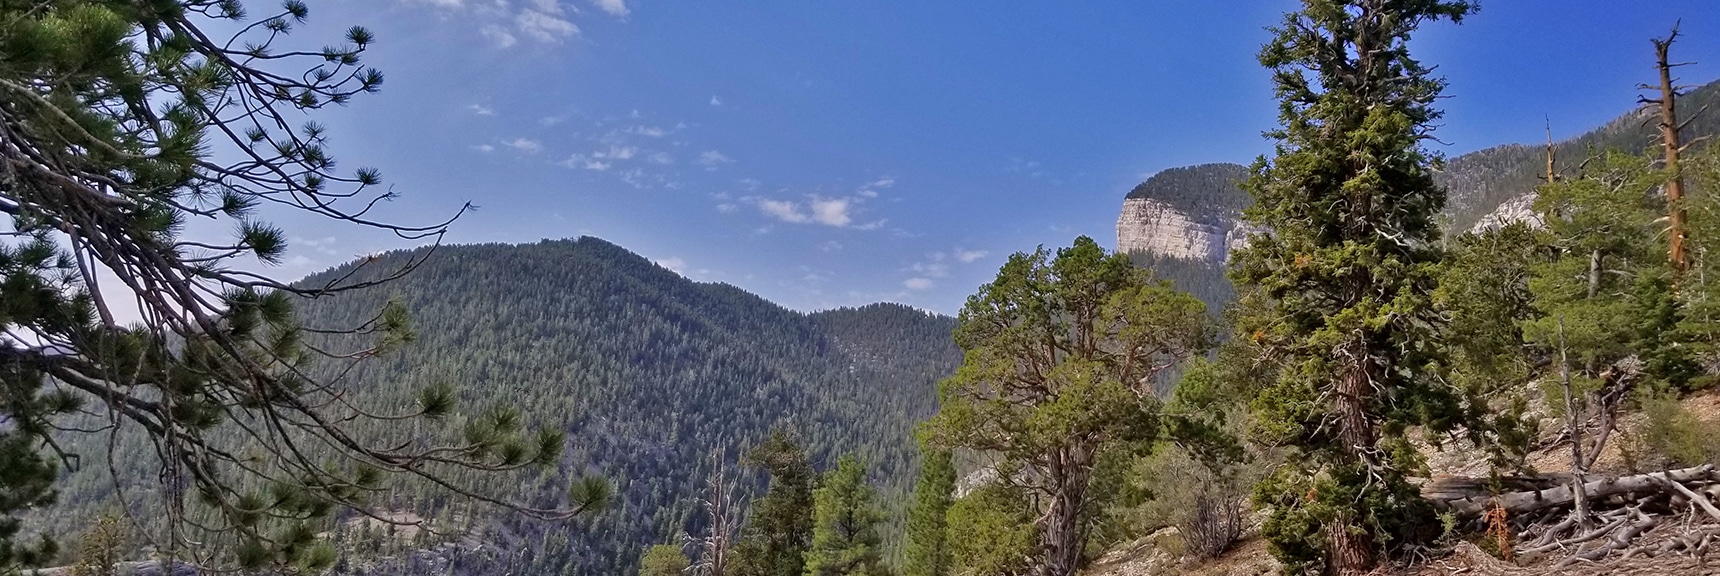 New Course: Skirt Mummy's Eastern Cliffs to Fletcher Peak, Return Via Cougar Ridge Trail | Deer Creek Rd - Mummy Cliffs - Mummy Springs - Raintree - Fletcher Peak - Cougar Ridge Trail Circuit | Mt Charleston Wilderness | Spring Mountains, Nevada